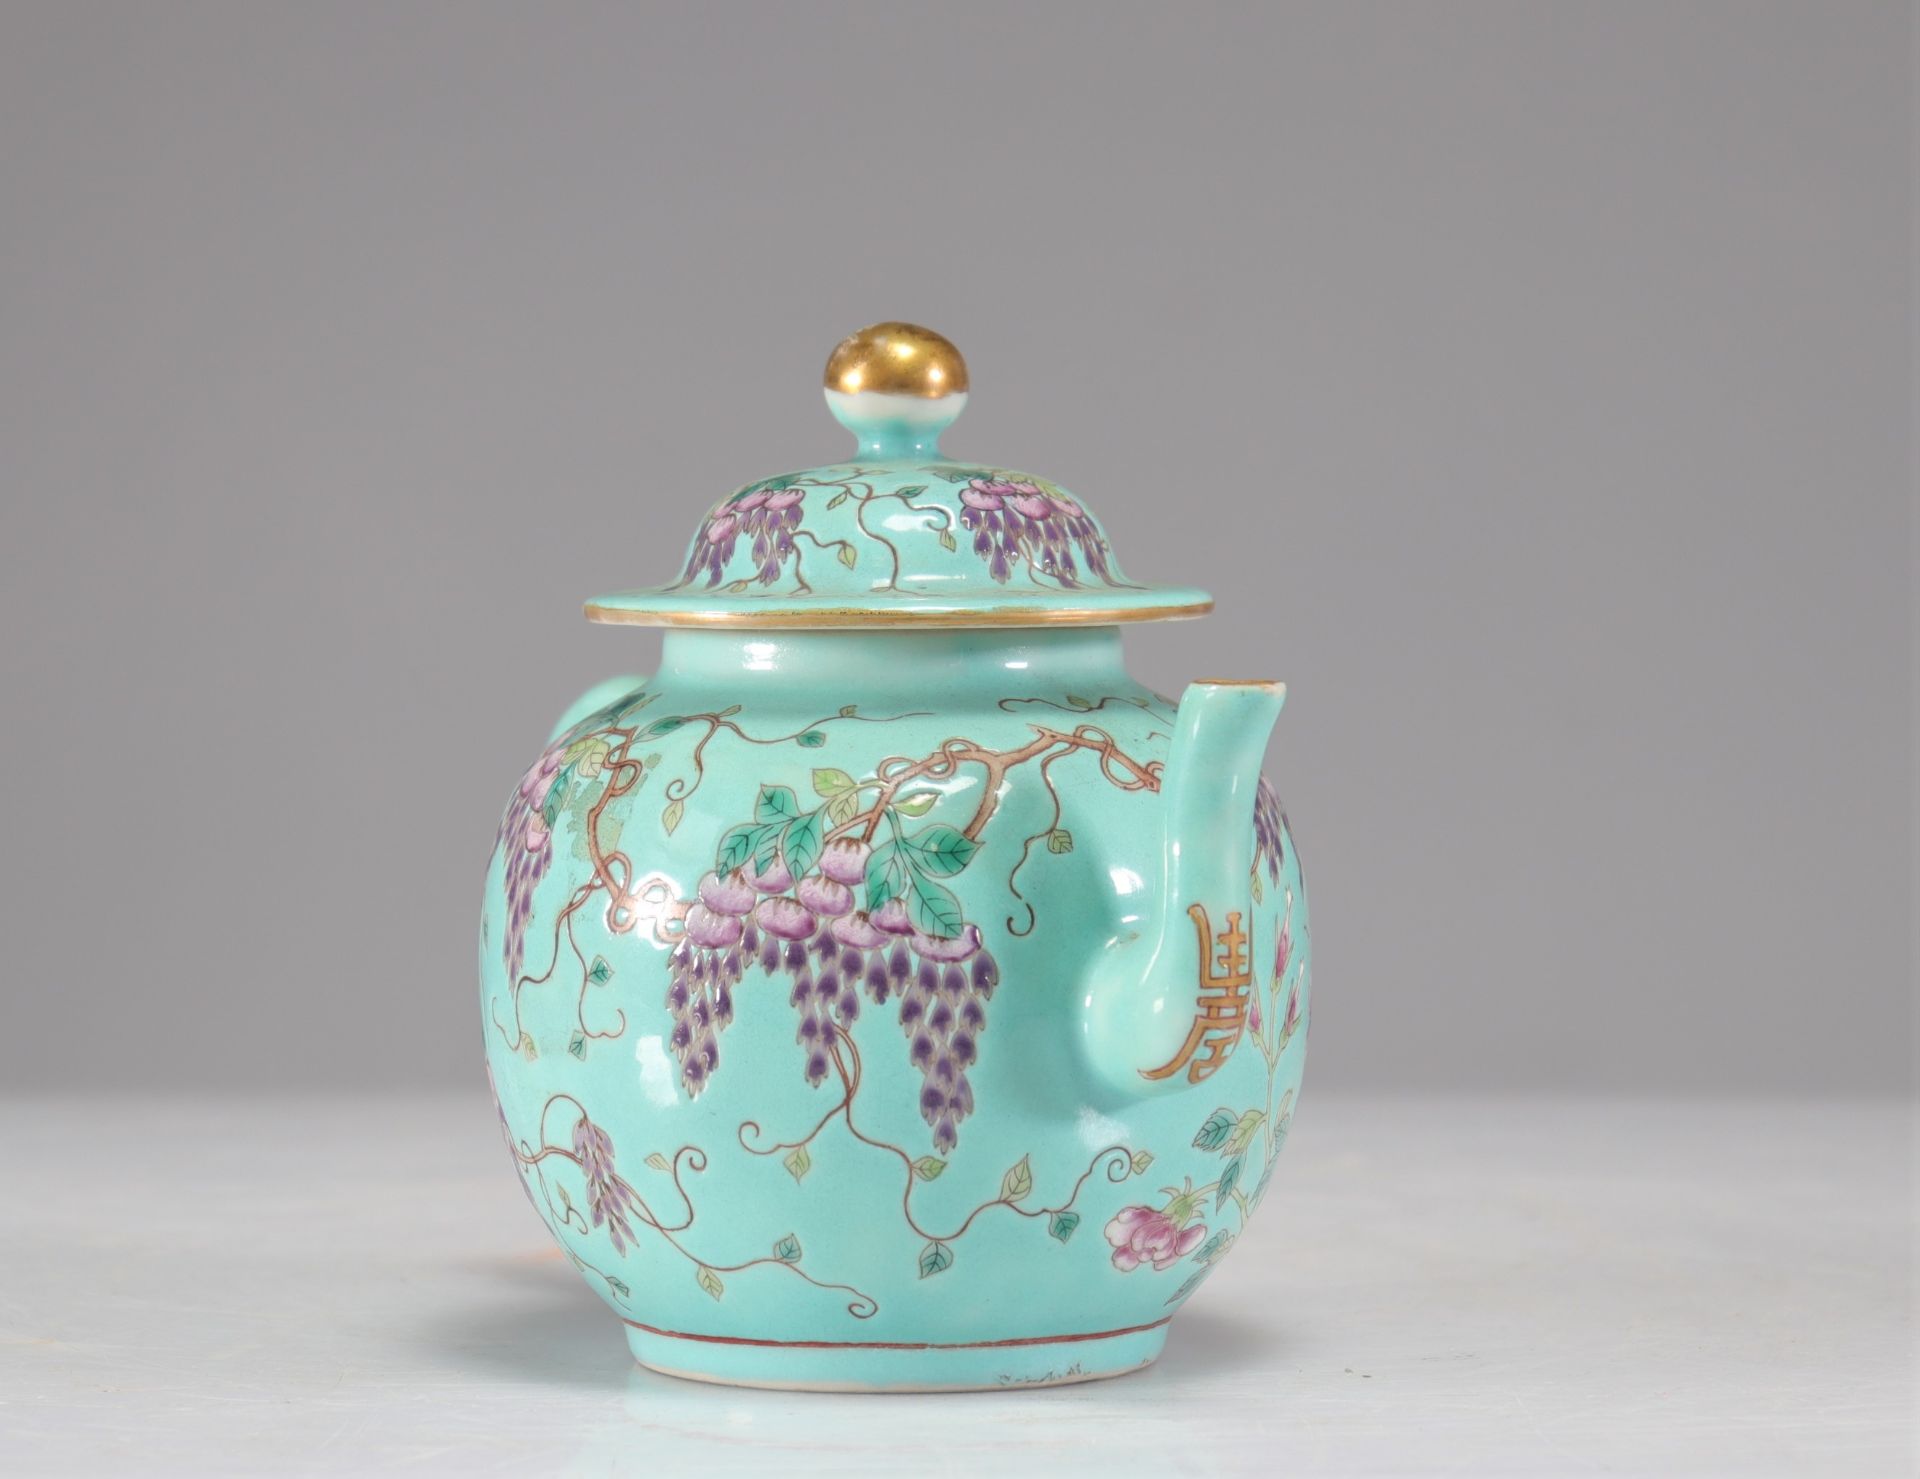 Guangxu mark and period porcelain teapot - Image 6 of 6